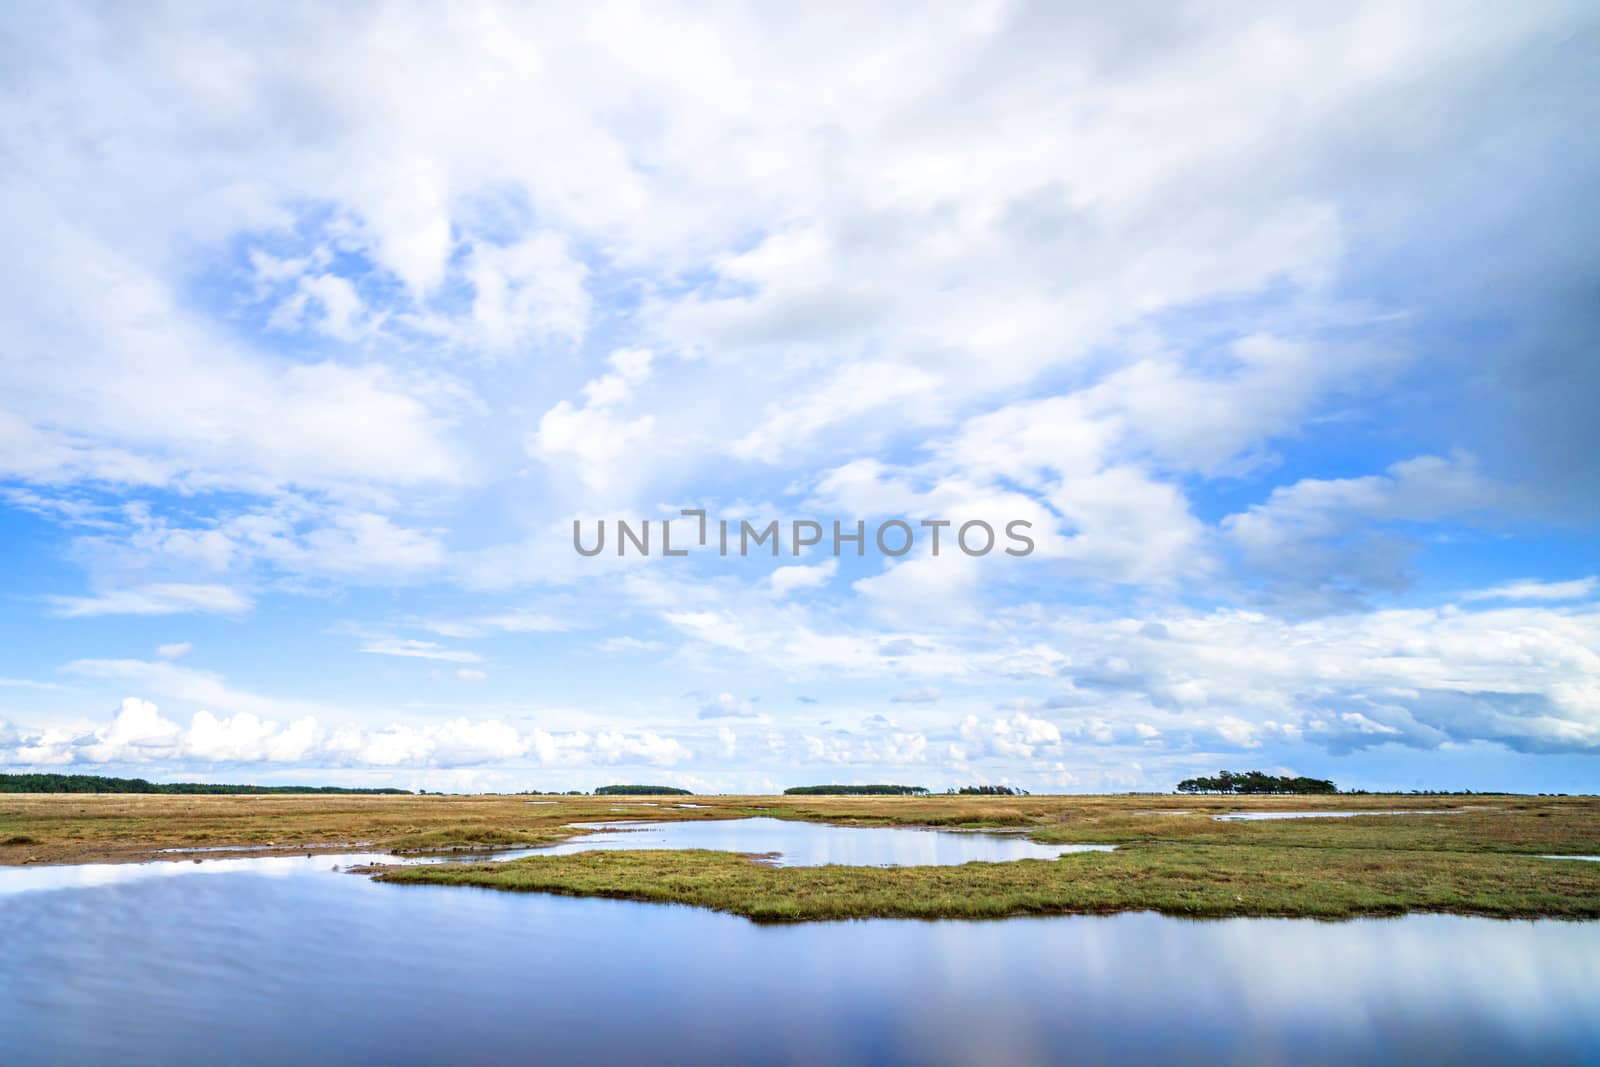 River landscape with dry plains under a blue sky by Sportactive